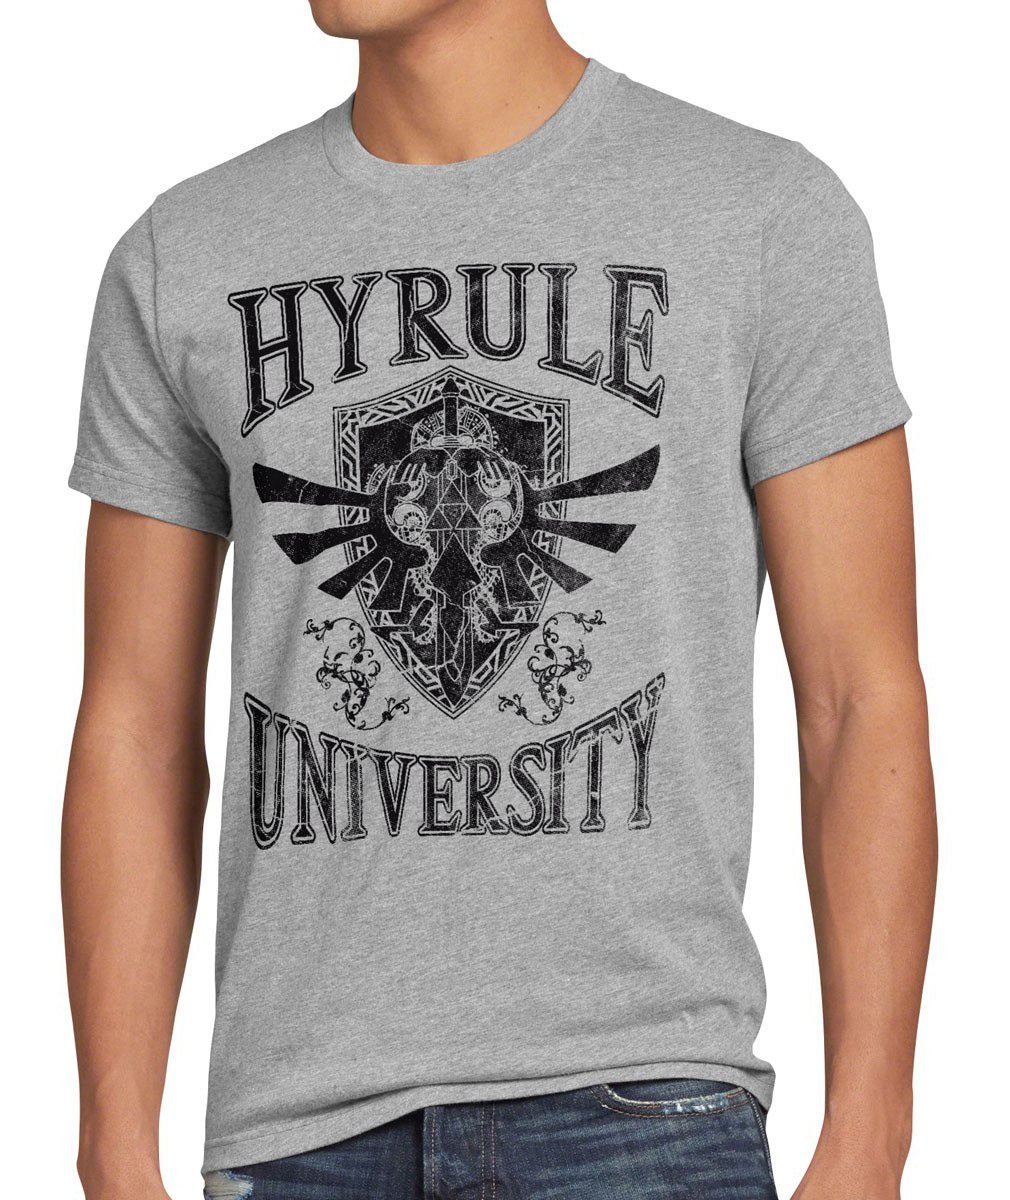 style3 Print-Shirt Herren T-Shirt Hyrule University link zelda wii past ocarina time switch waker grau meliert